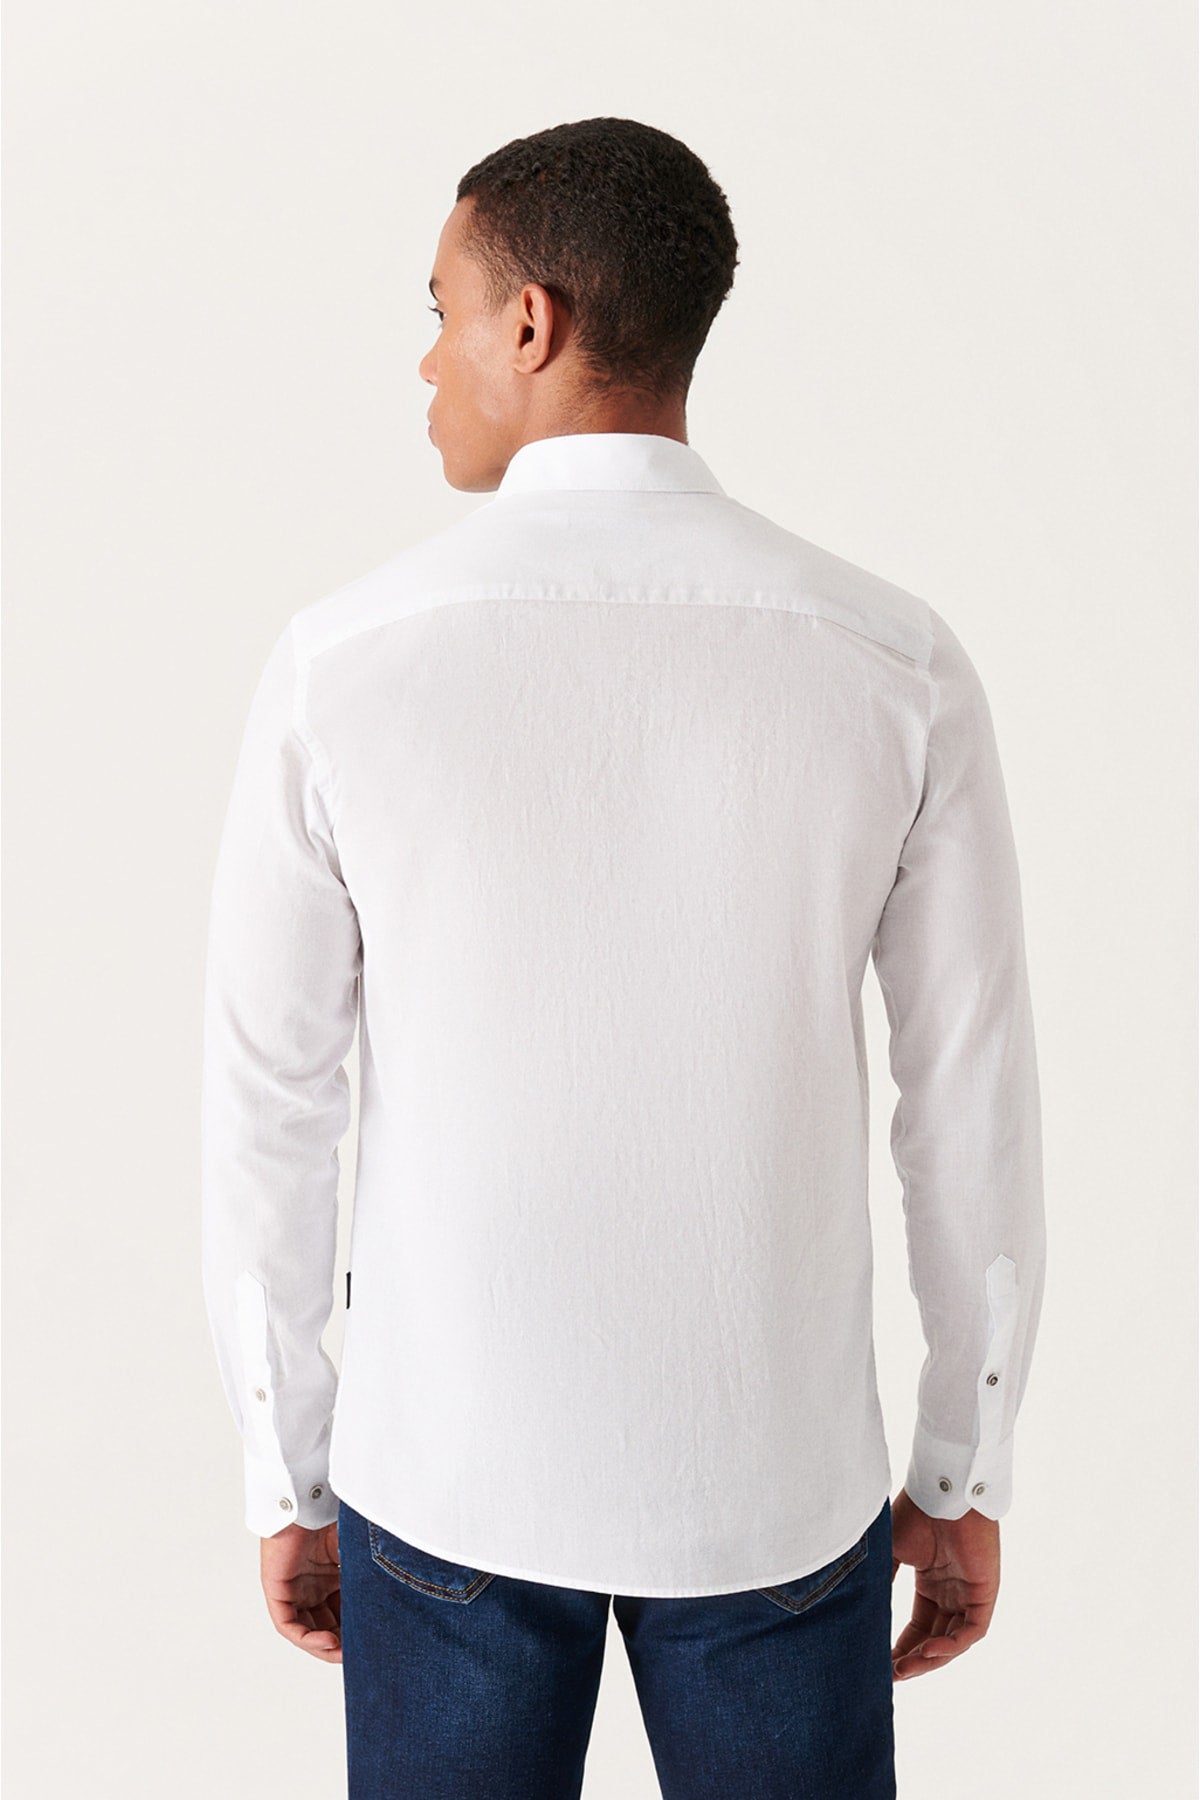 Men's White Oxford 100 %Cotton Regular Fit Shirt E002206